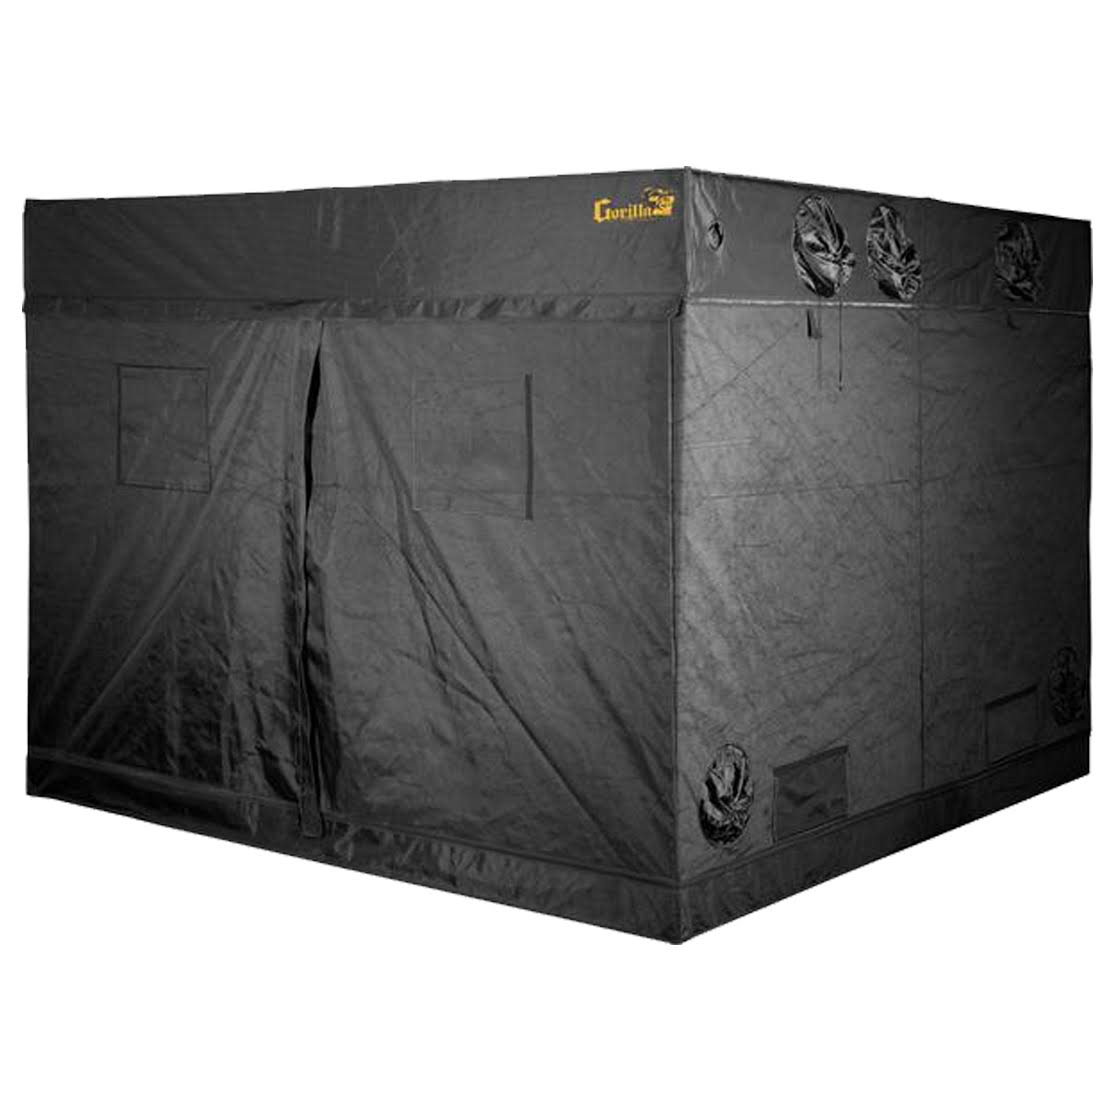 Gorilla Grow Tent - Premium 8ft x 8ft